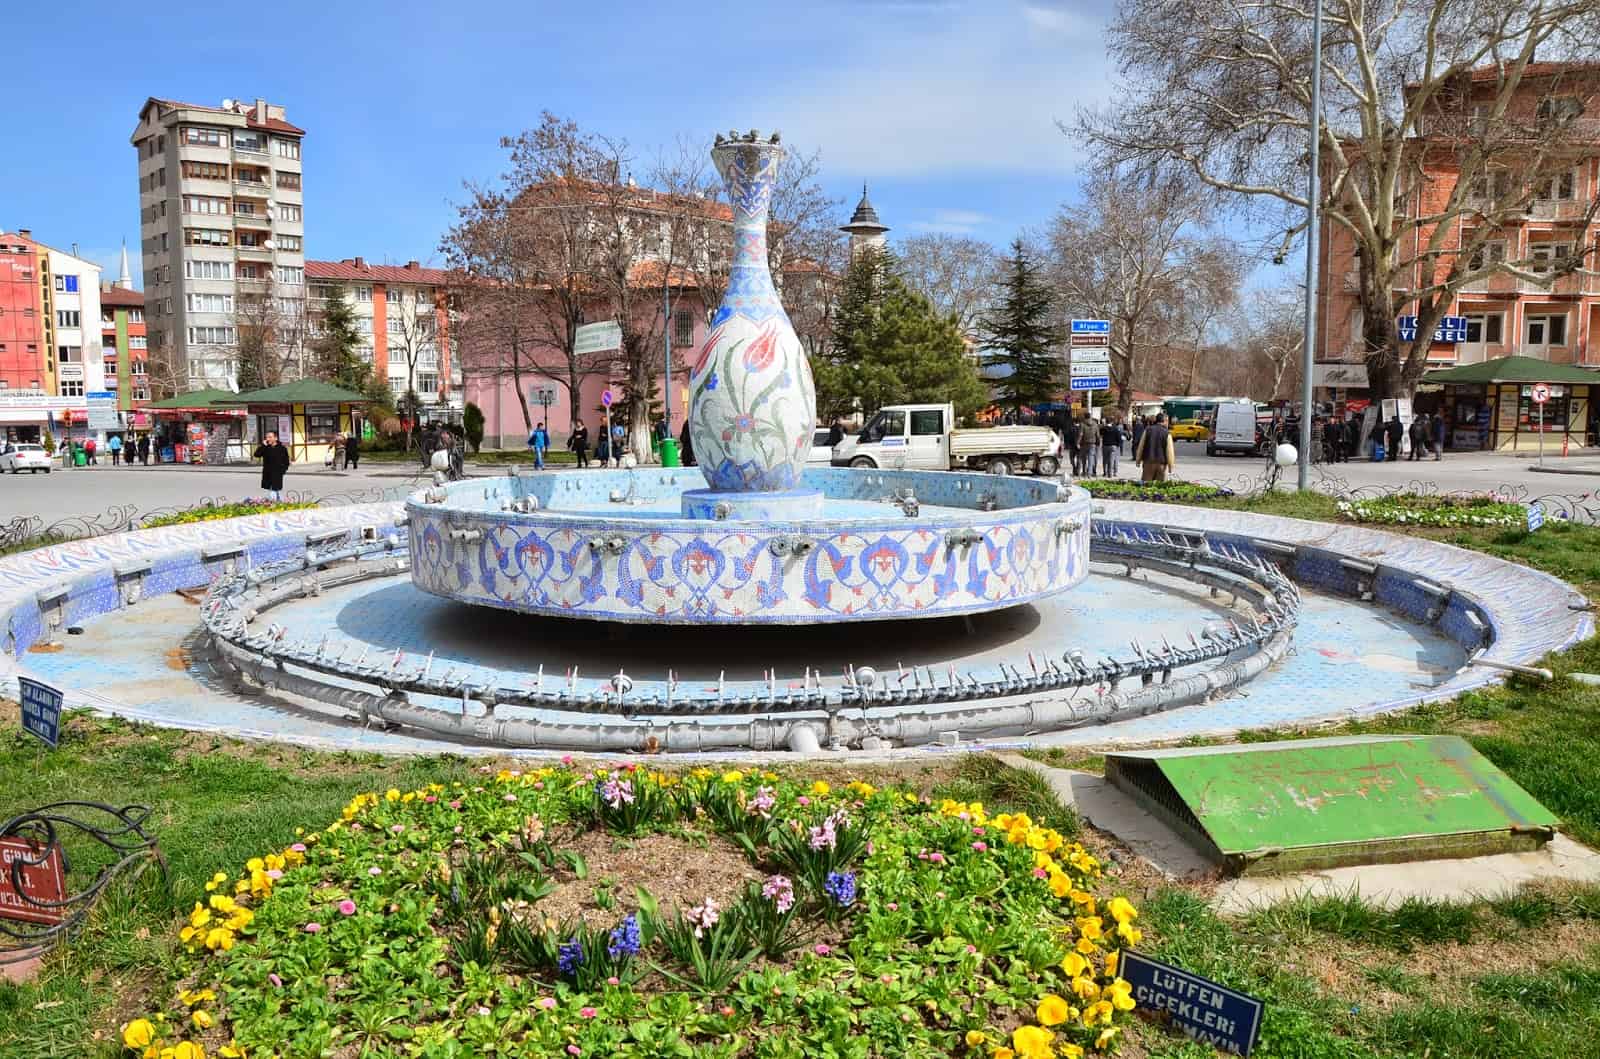 Kütahya pottery fountain in Kütahya, Turkey